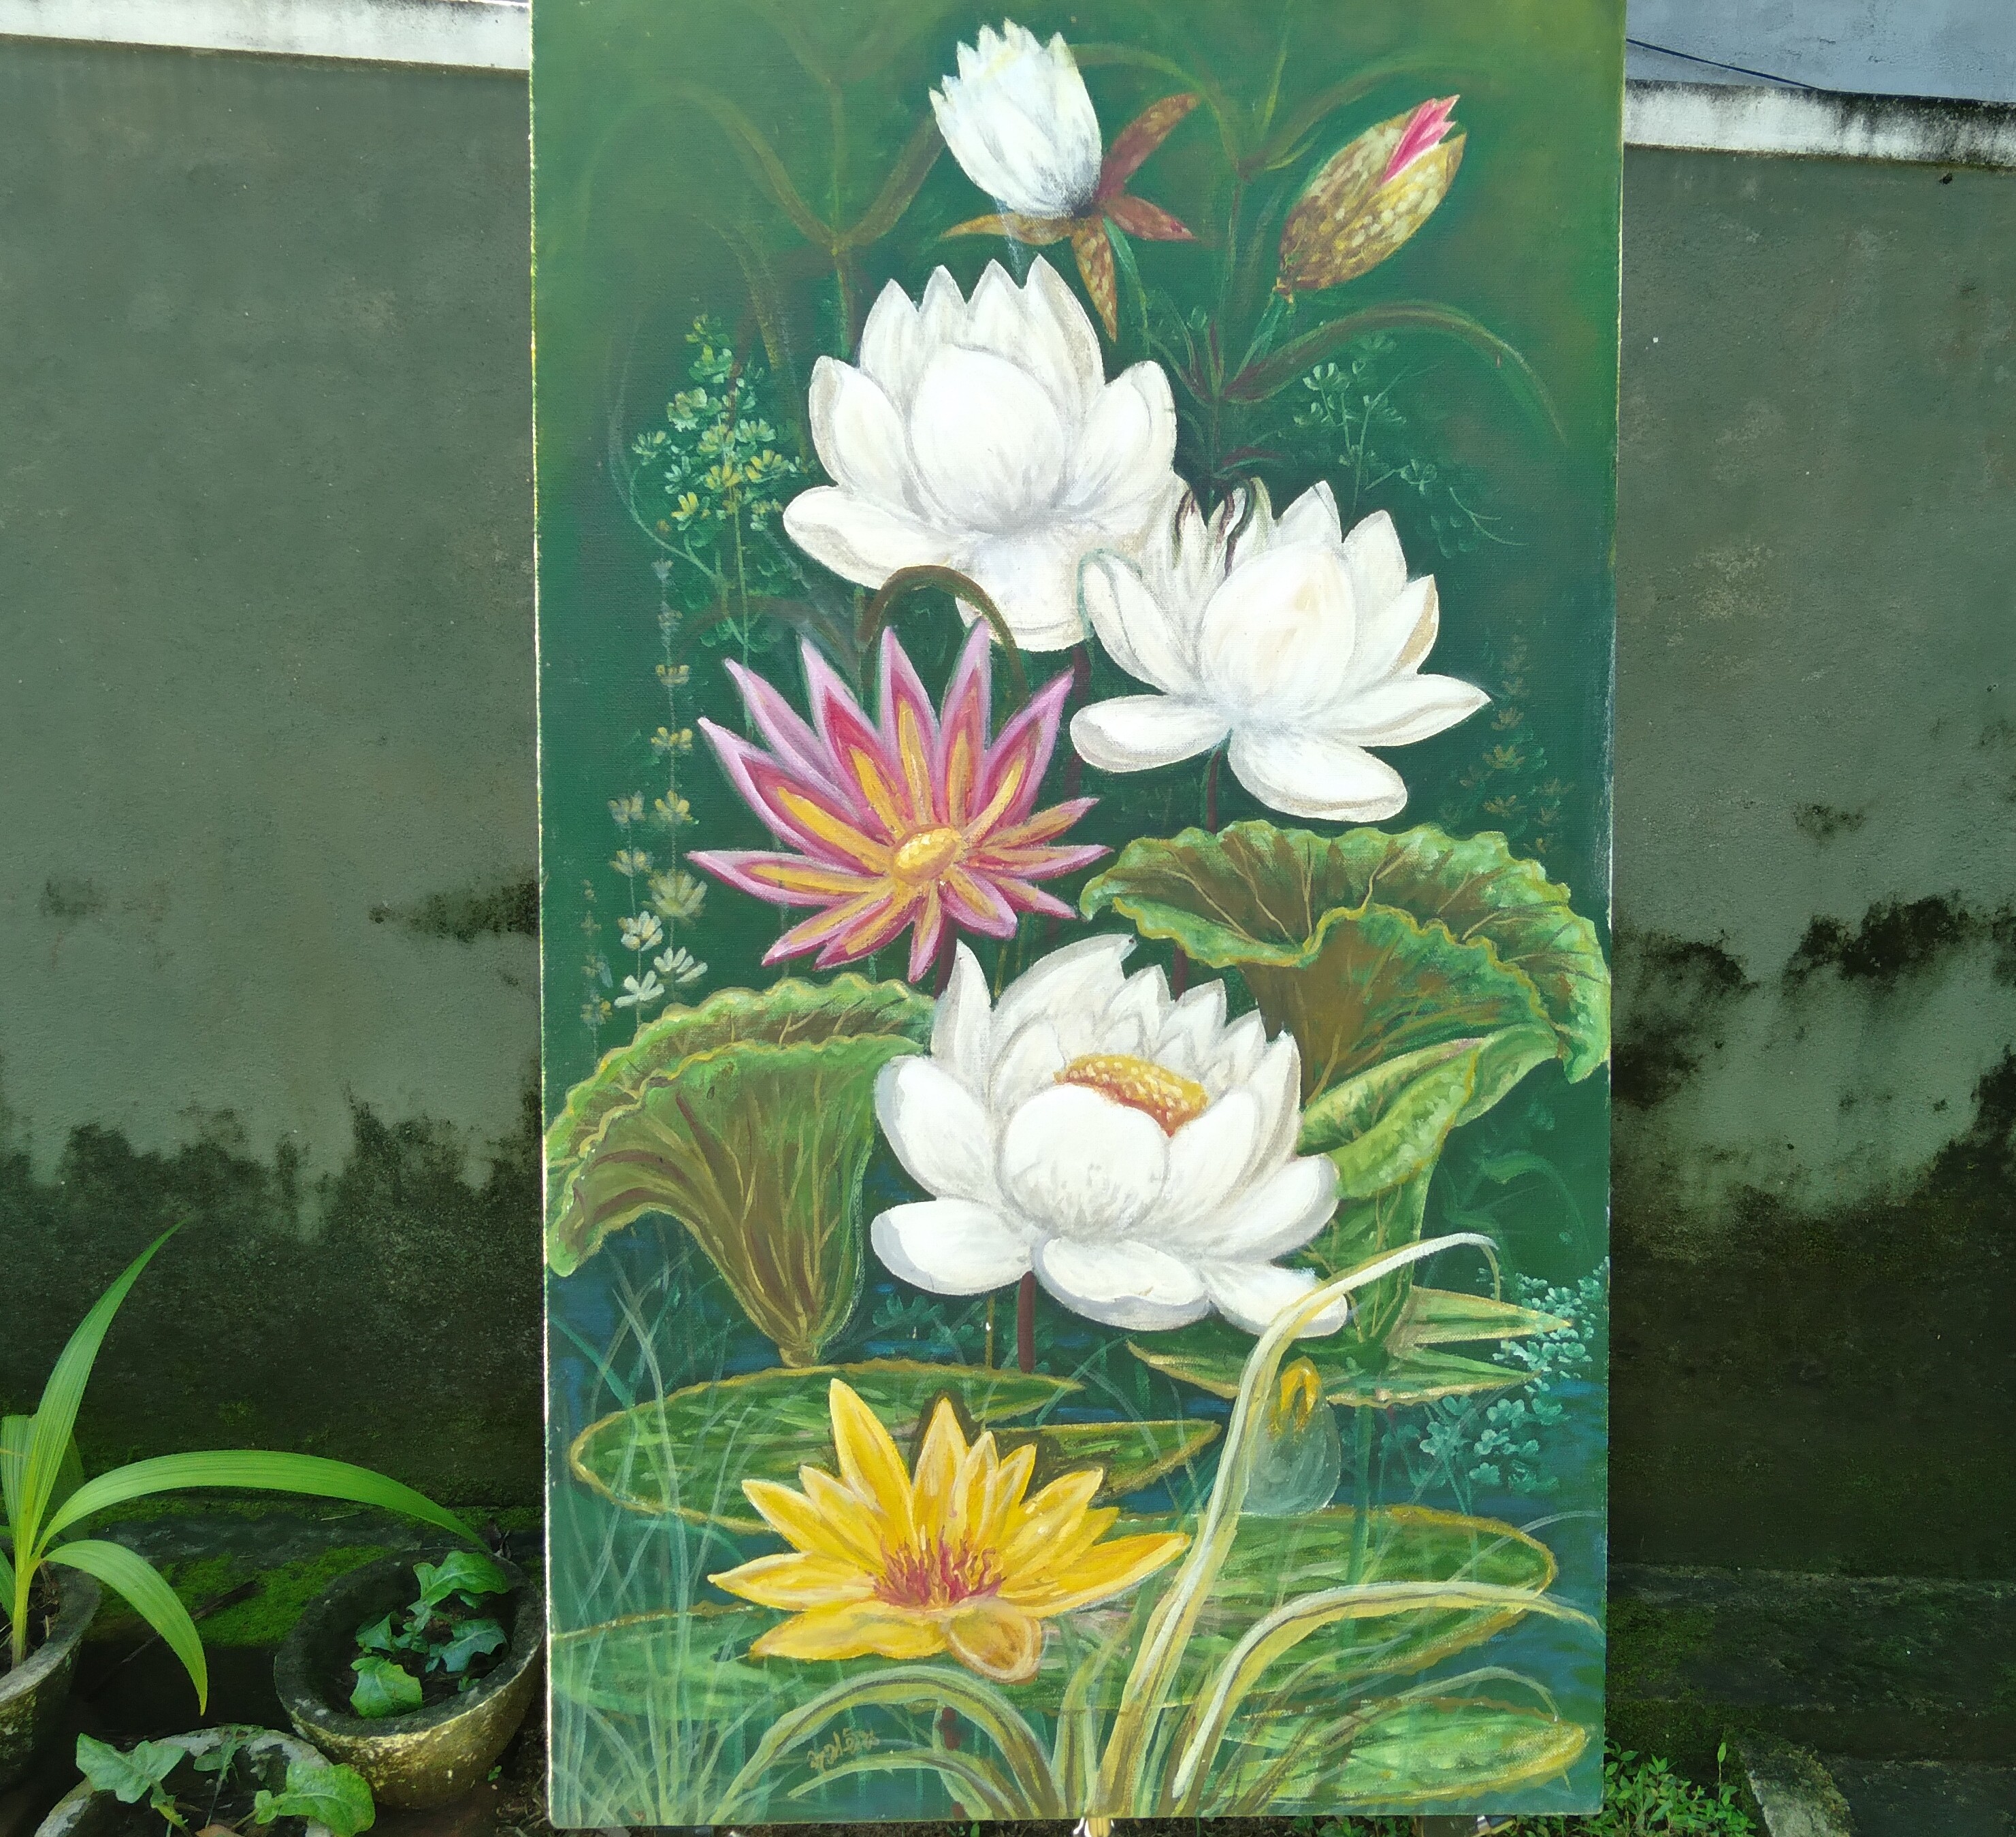 Lotus flowers by W. Oliver Mendis